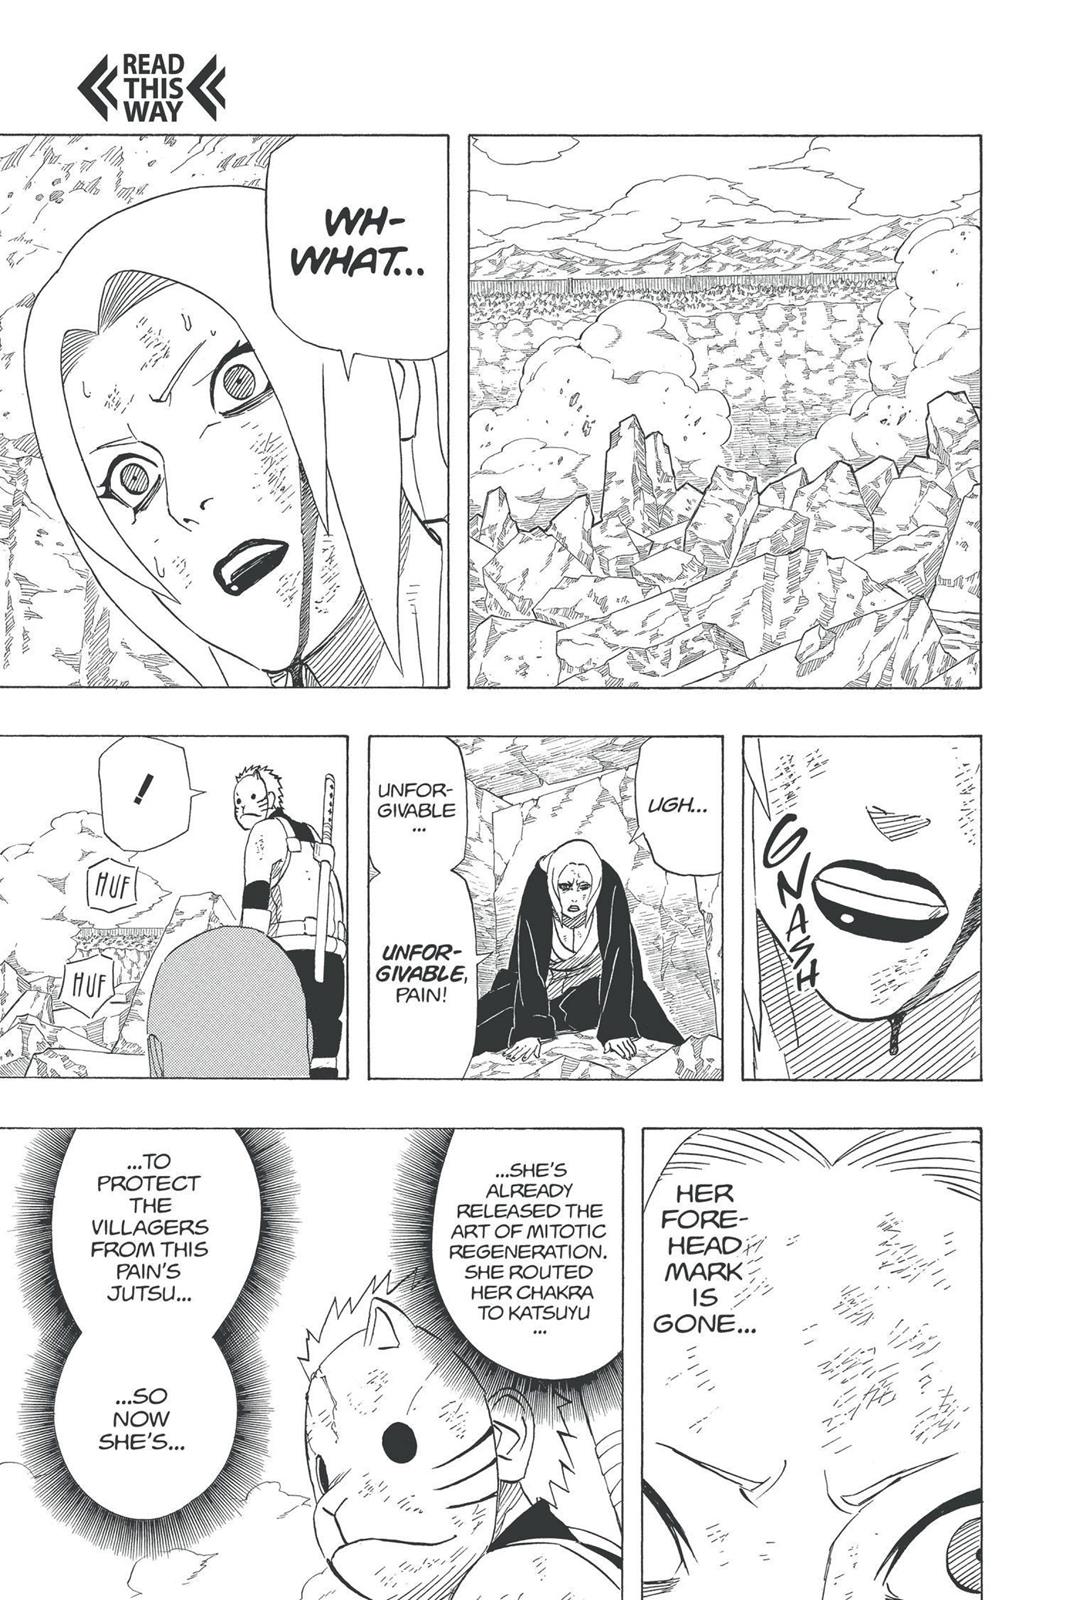 Sasuke MS vs Sakura adulta. - Página 3 0430-010